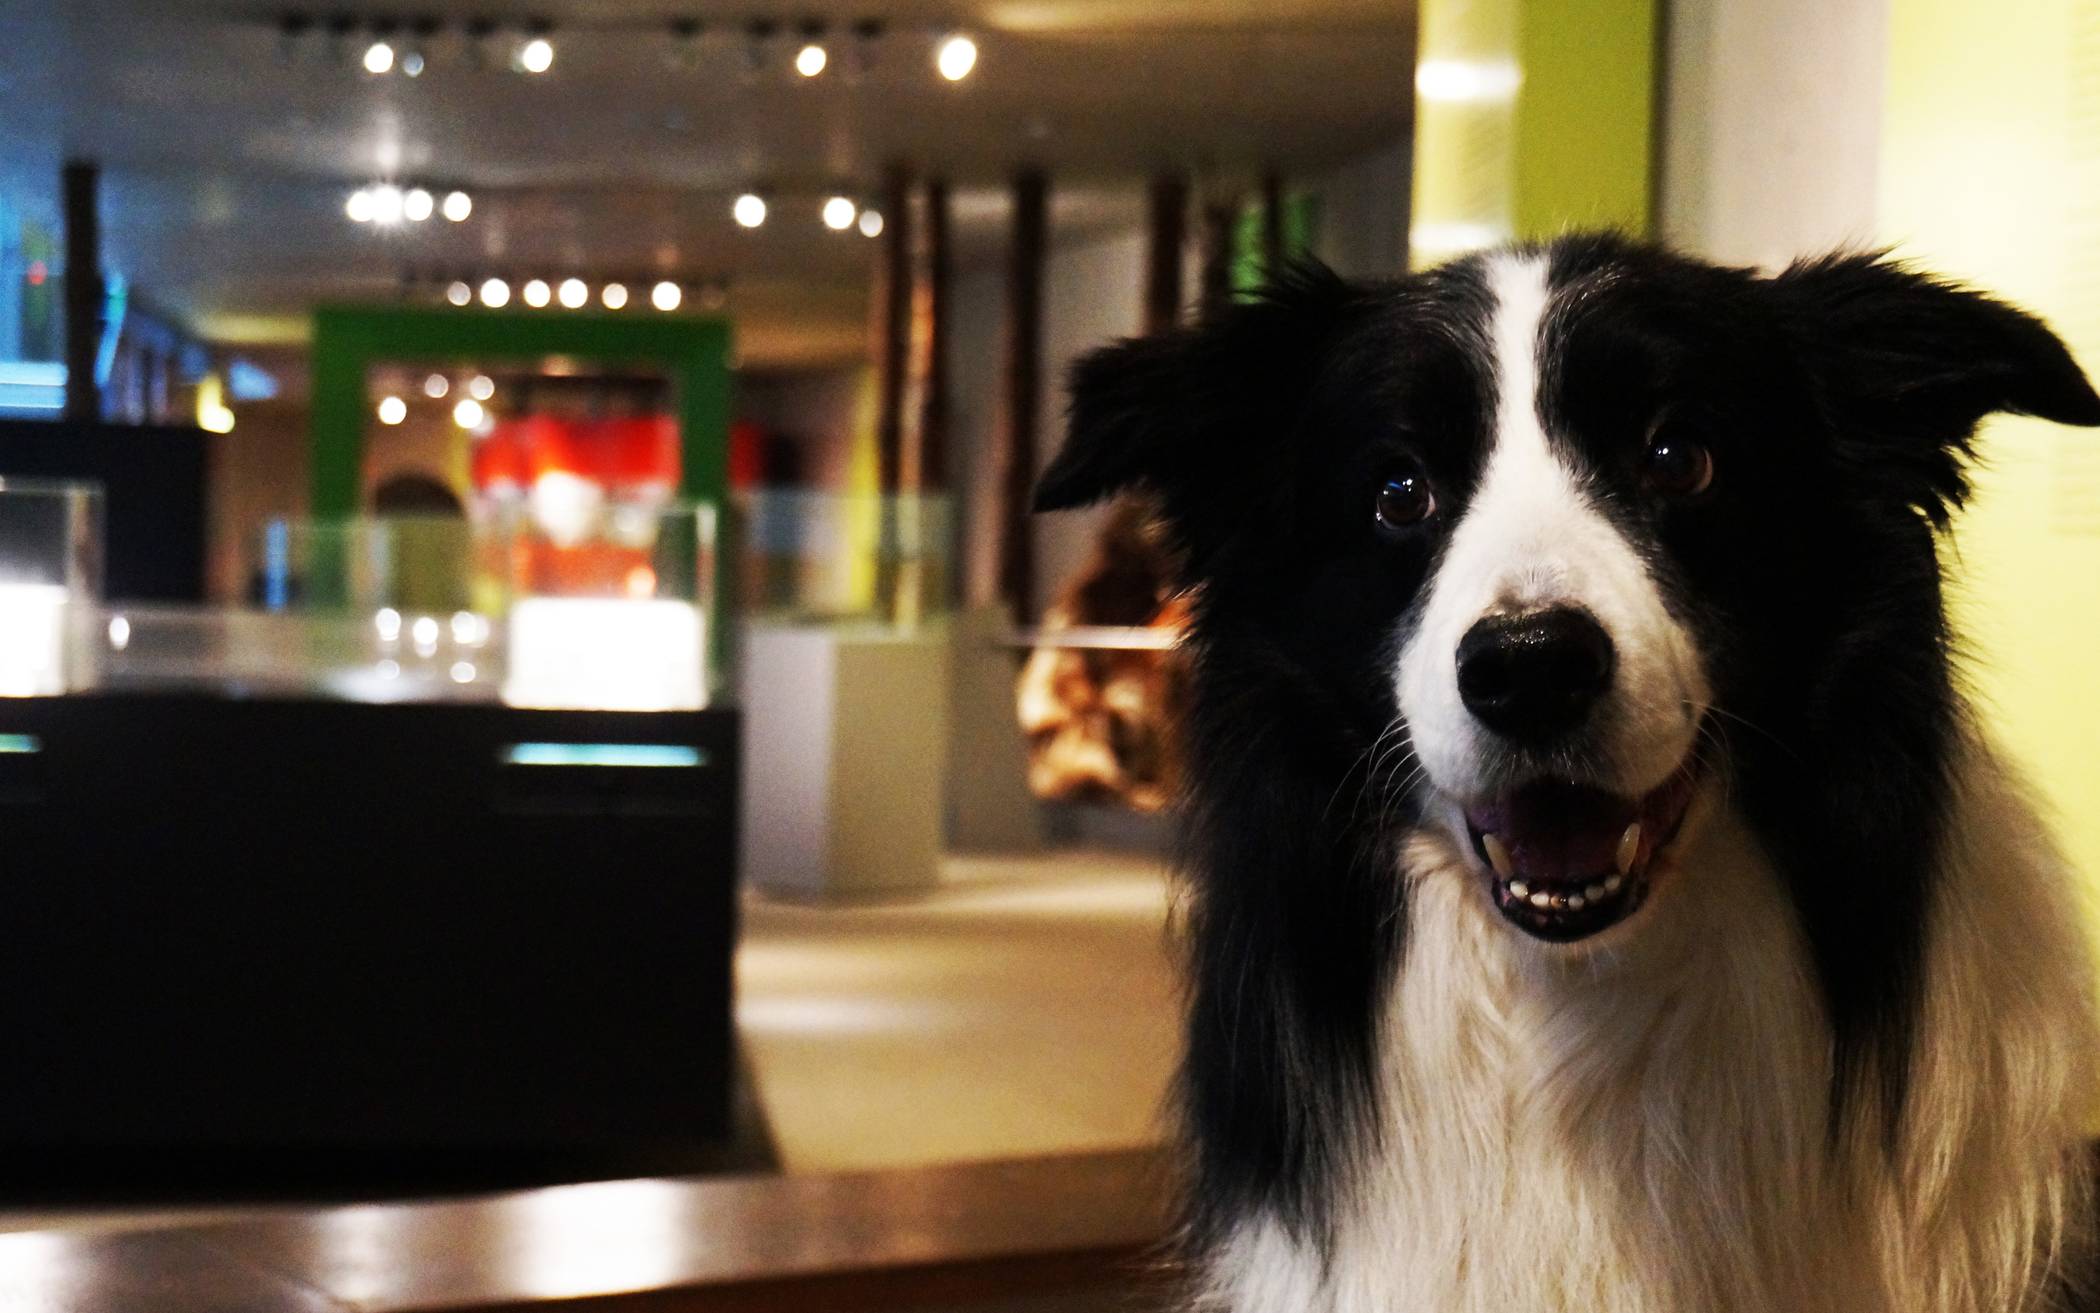 Doggy Day im Neanderthal Museum: Mit dem Hund ins Museum